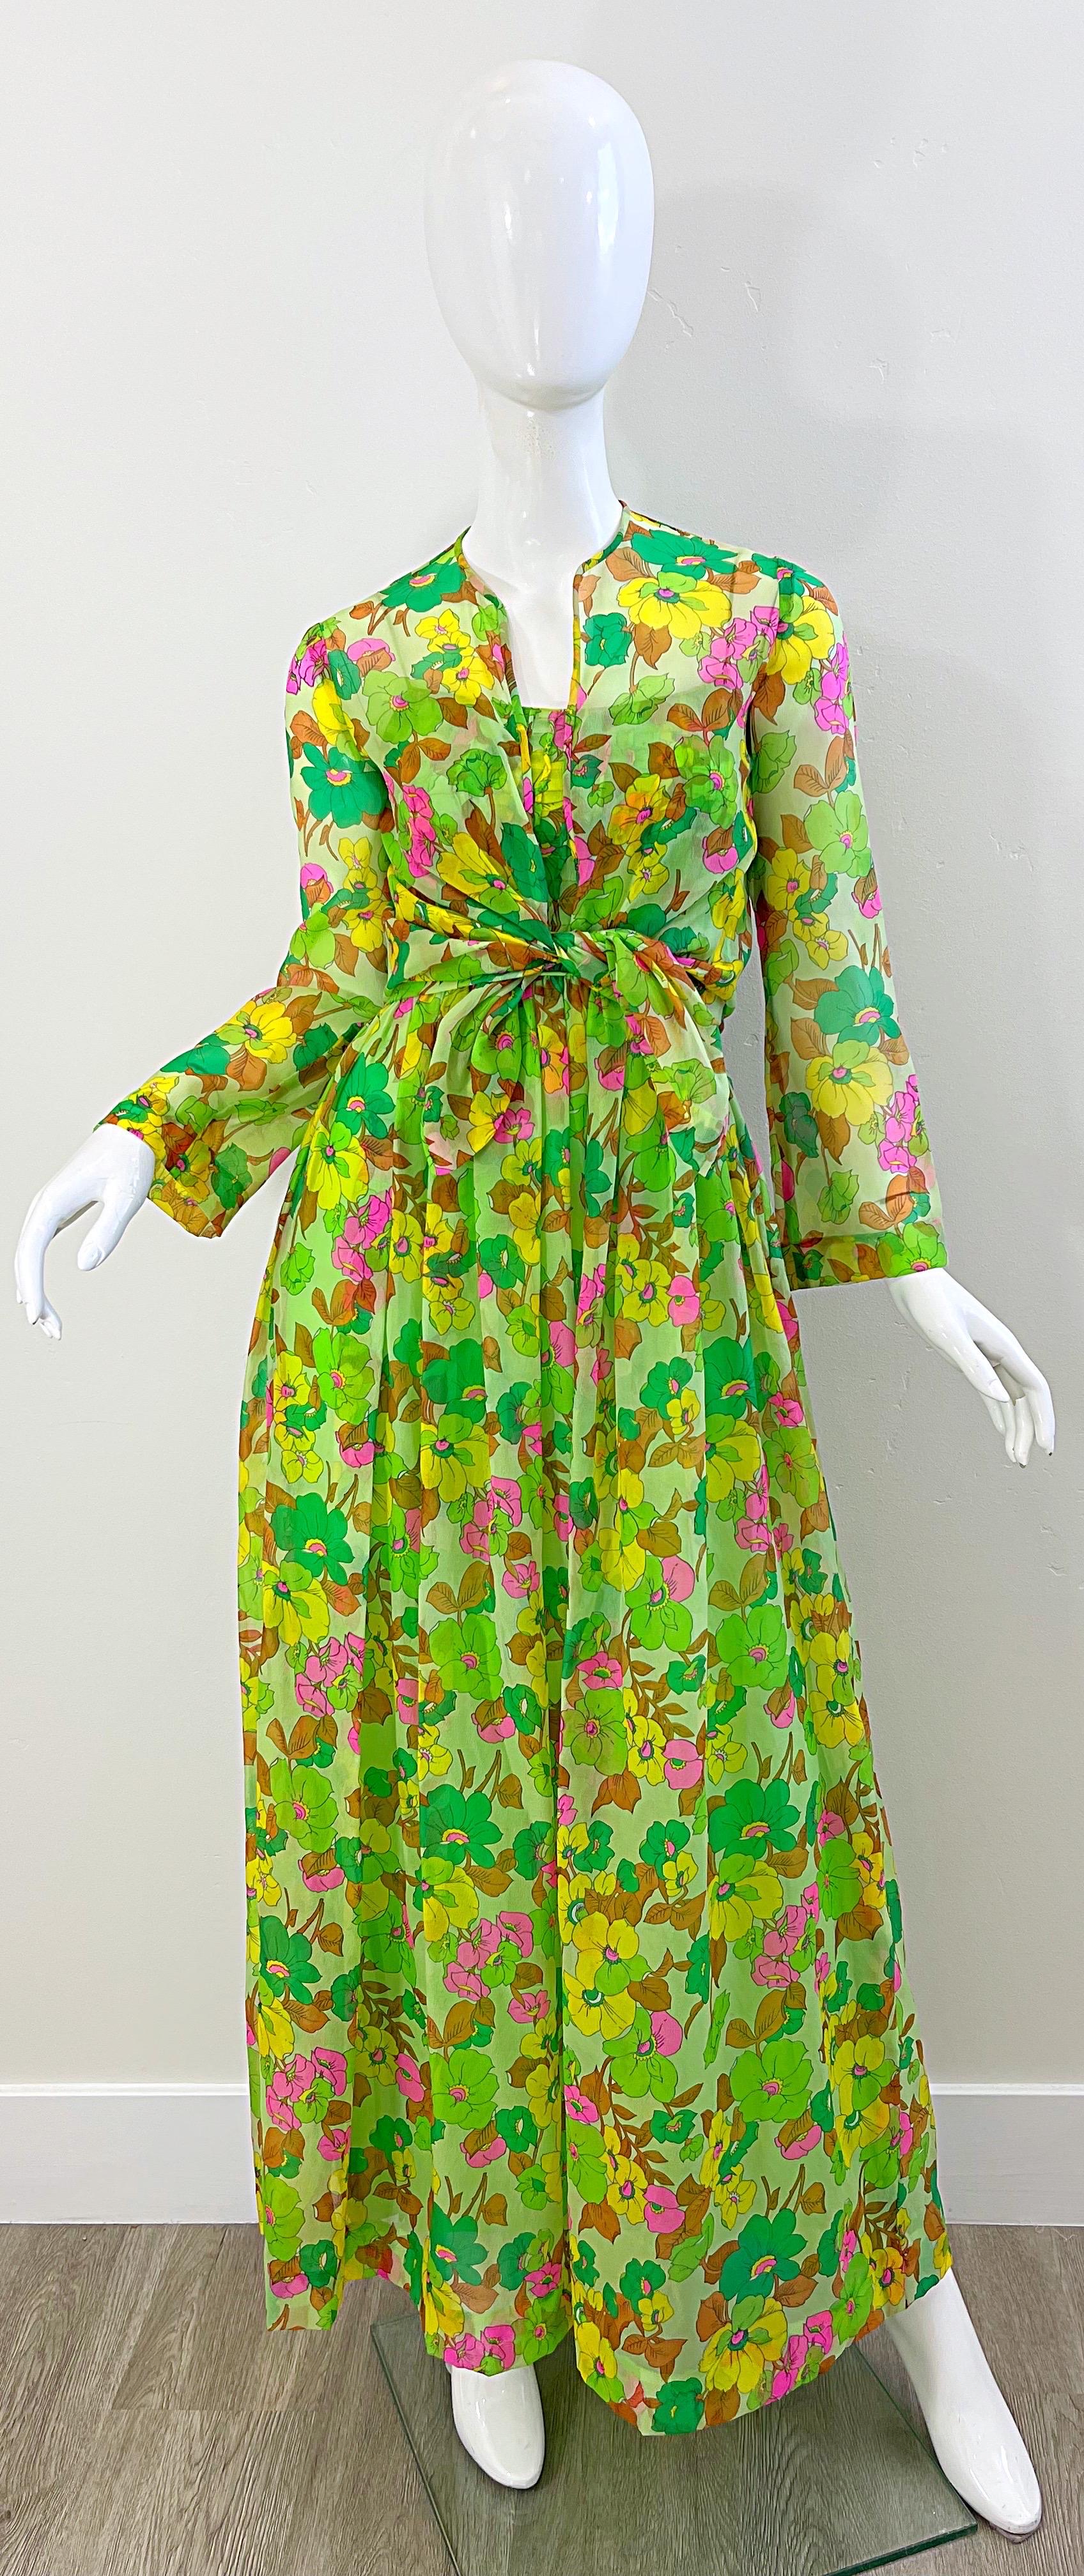 neon teal dress